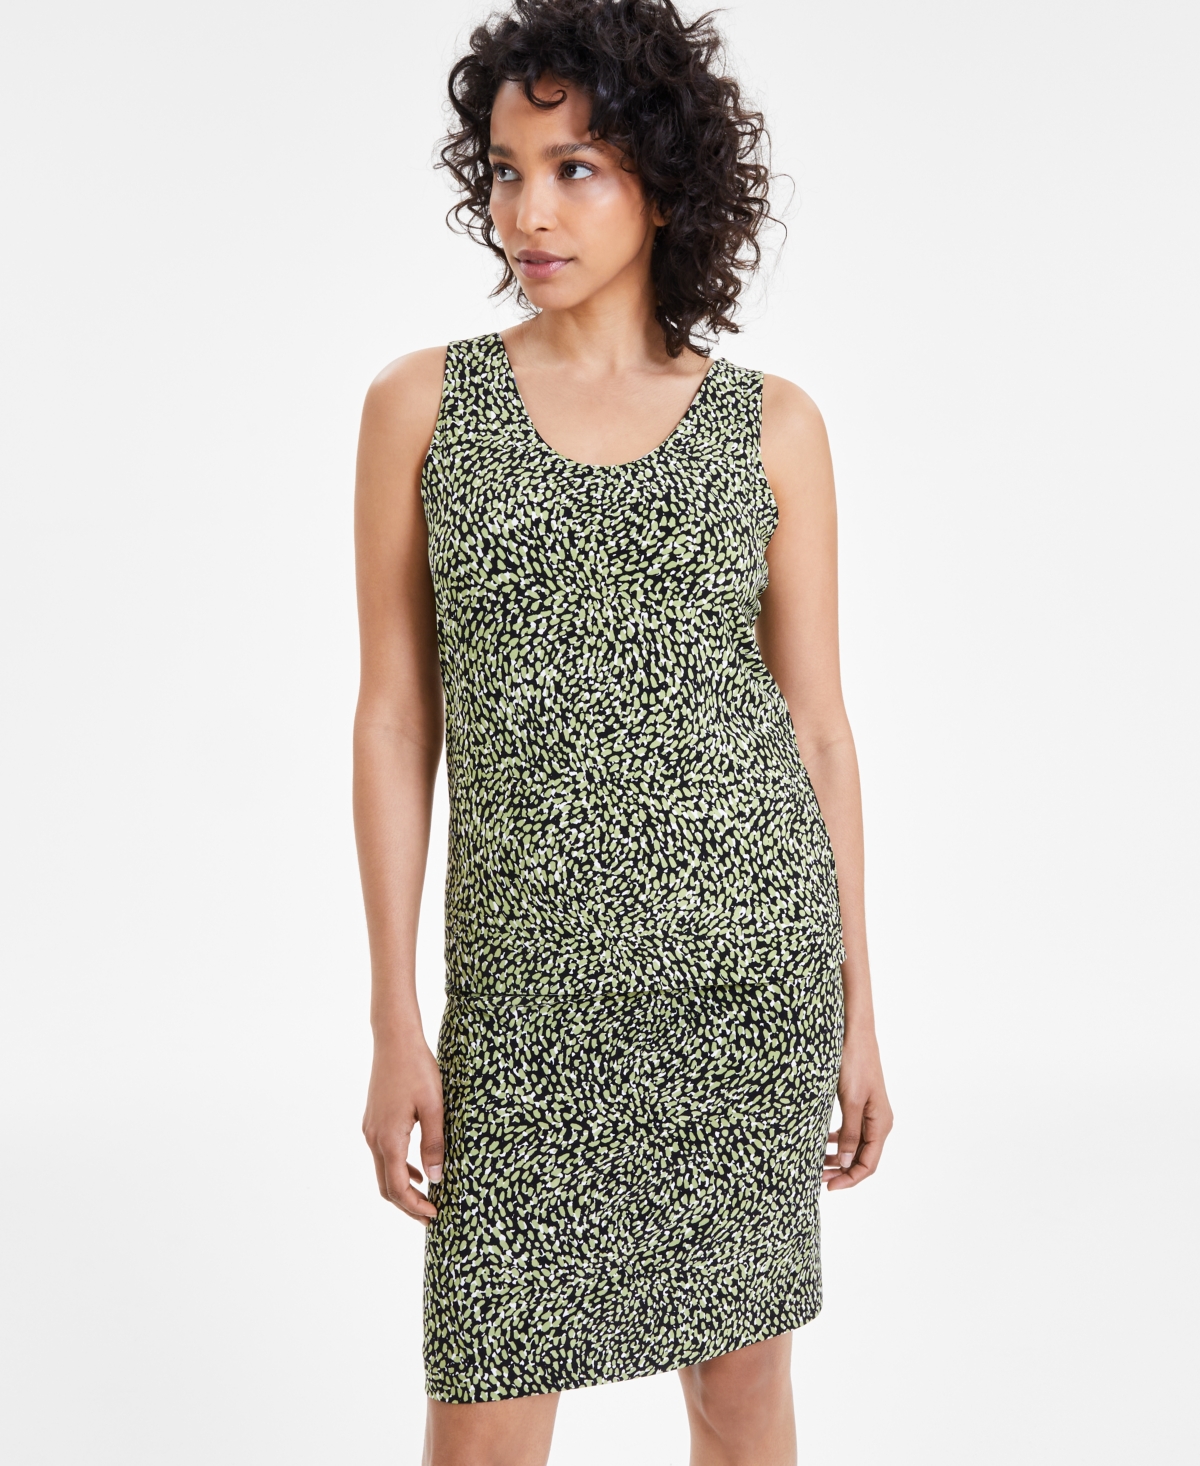 Women's Printed Reversible Scoop-Neck Tank Top - Leafy Green